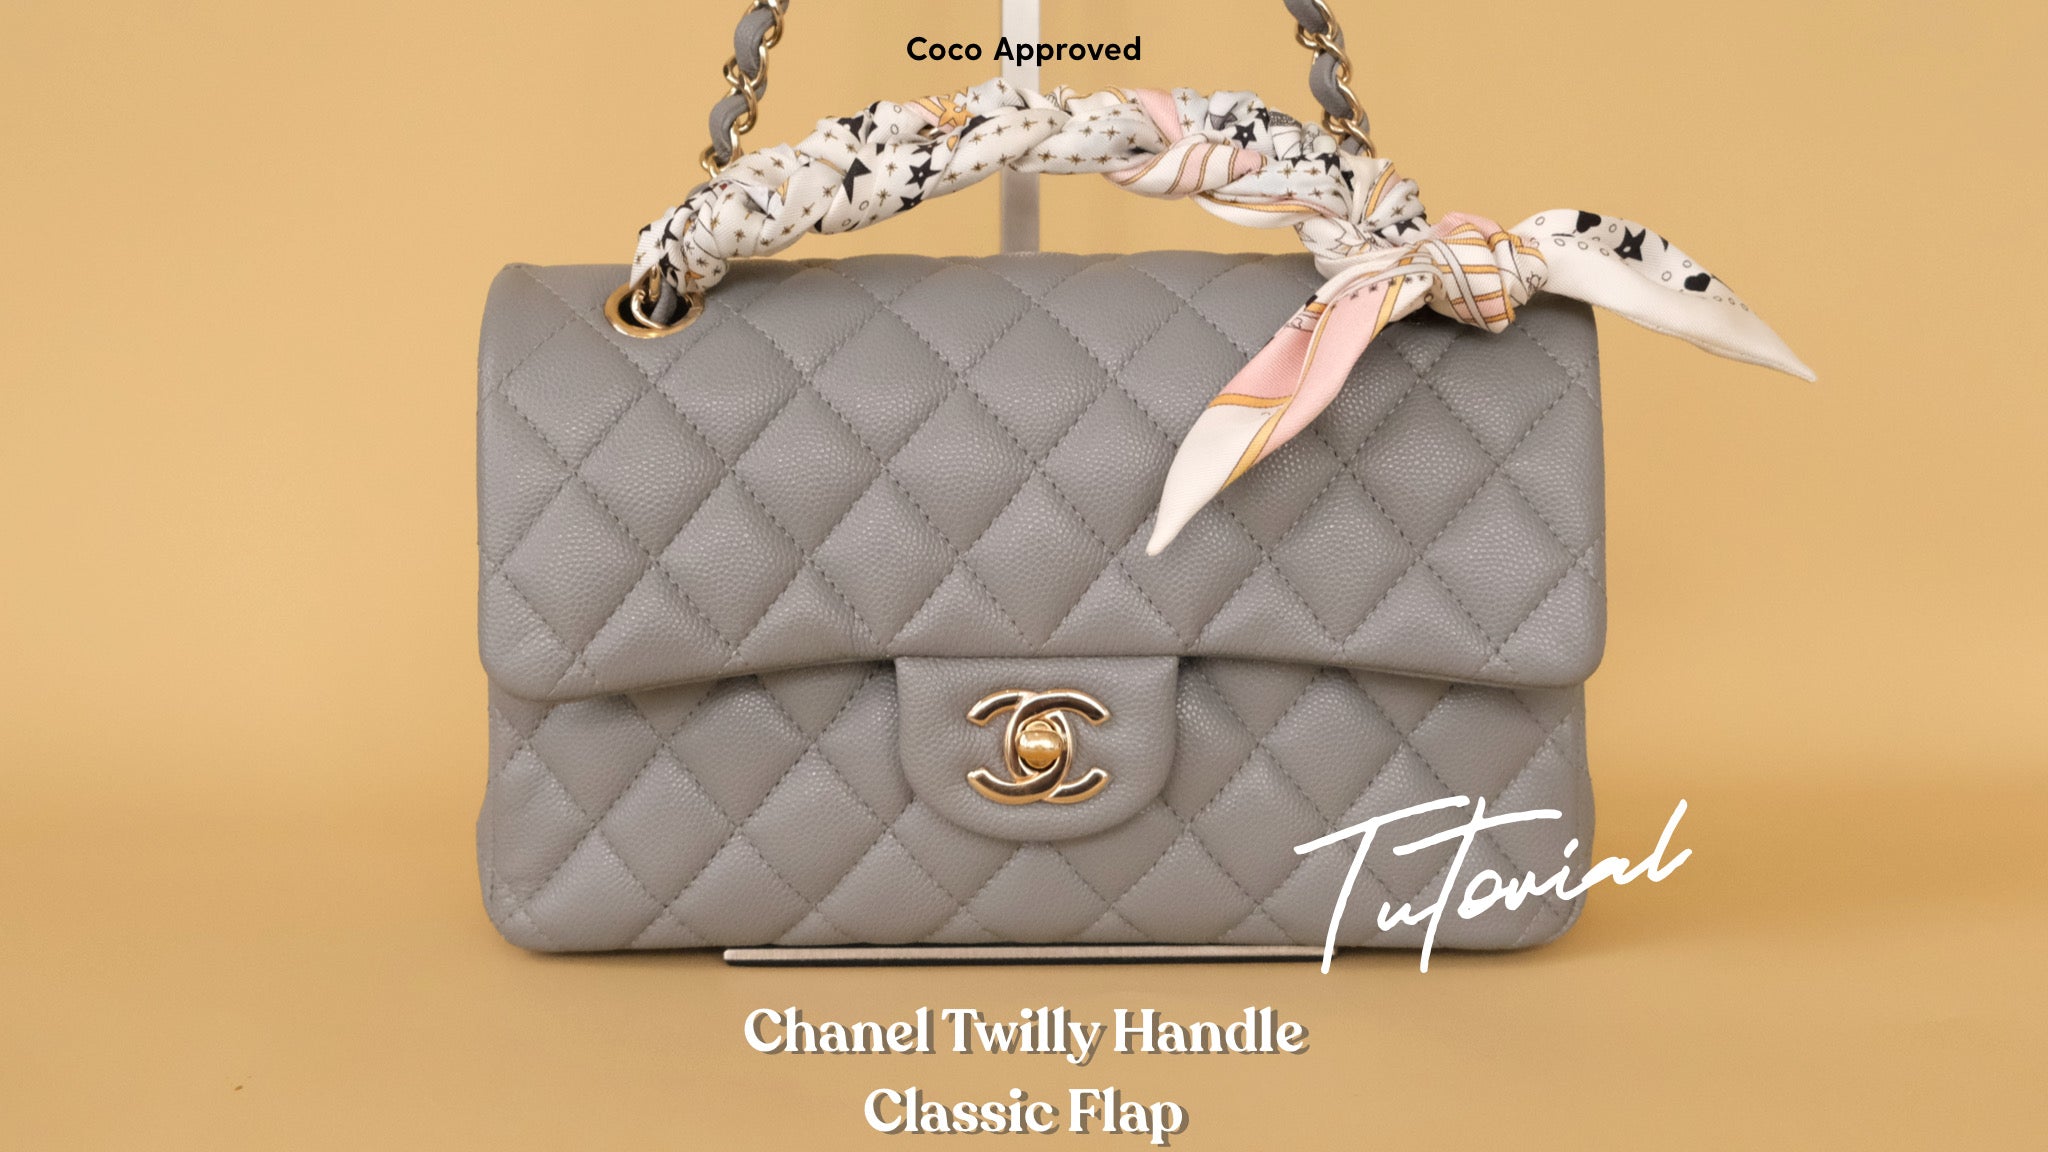 20 Chanel ideas  chanel, chanel bag, classic flap bag